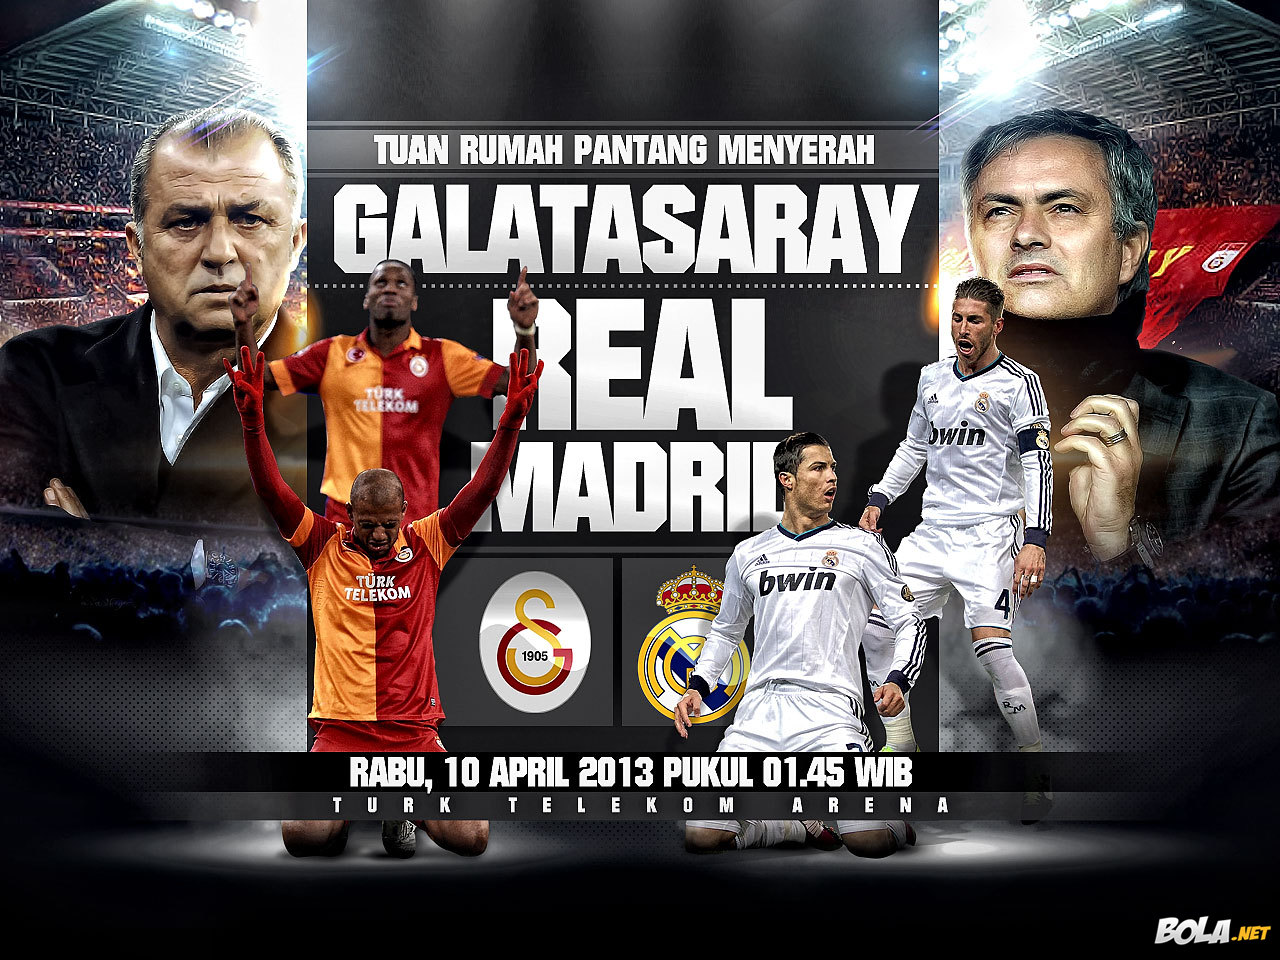 Deskripsi : Wallpaper Galatasaray Vs Real Madrid, size: 1280x960